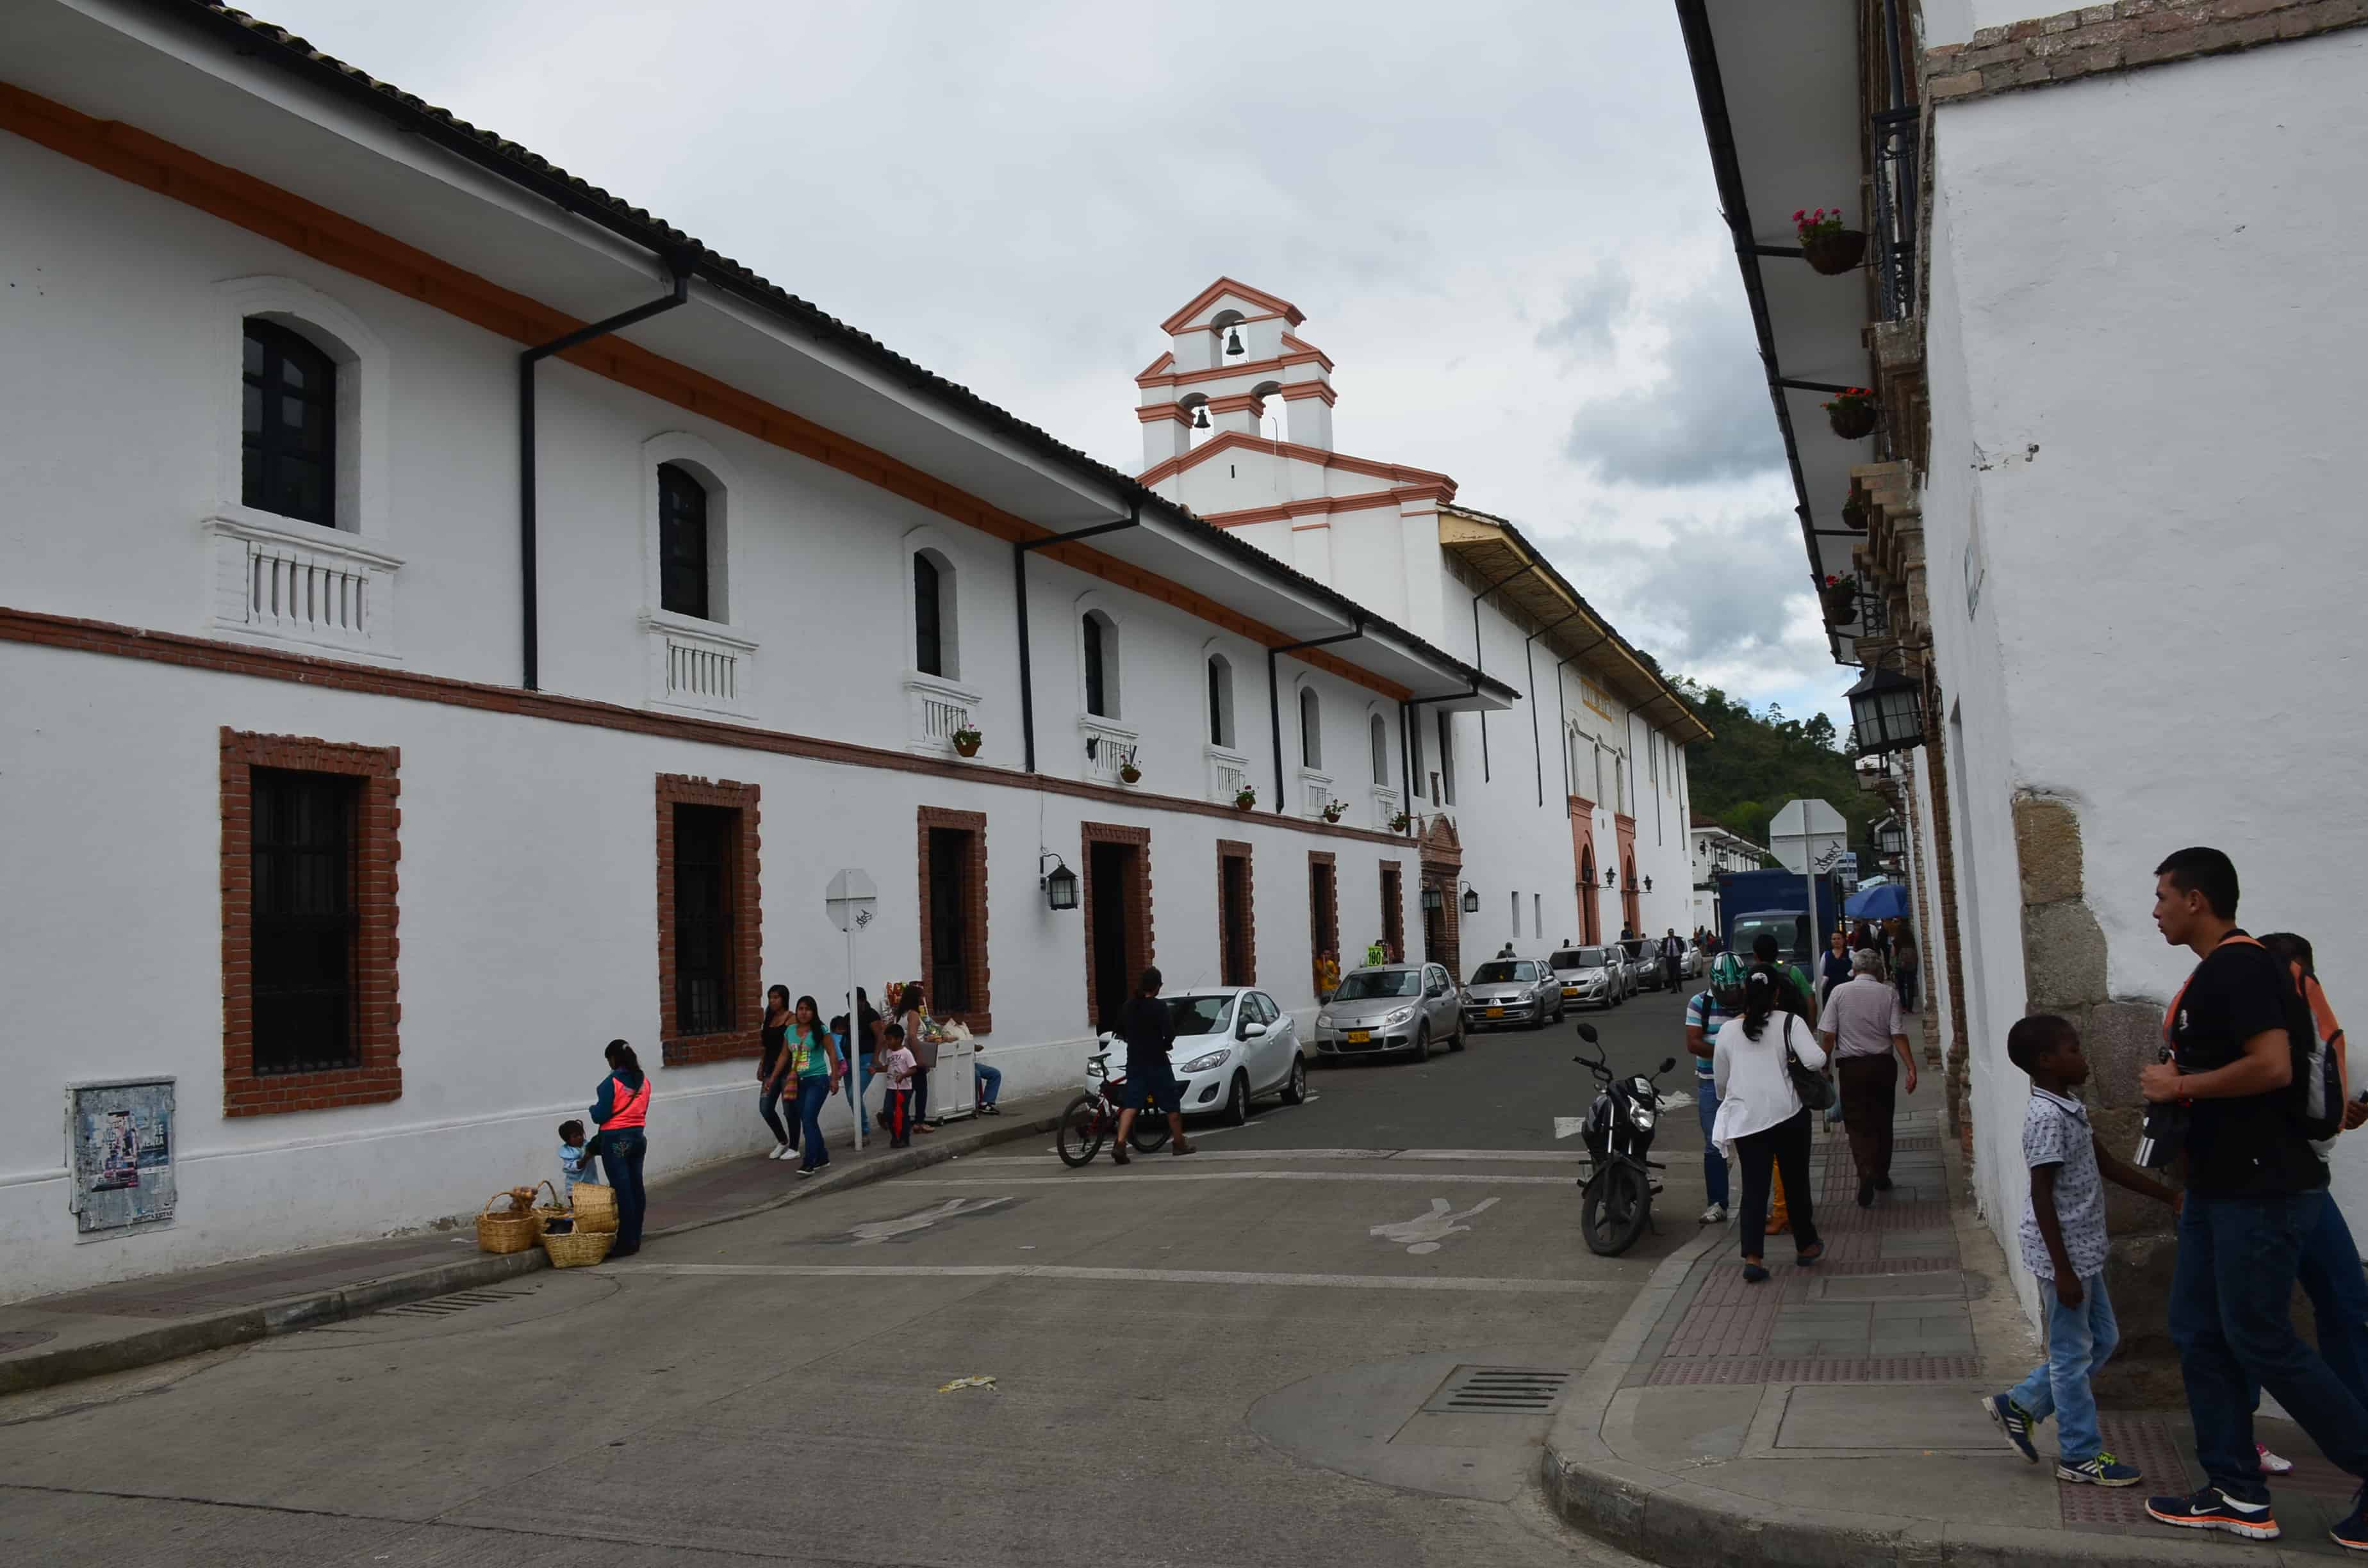 Iglesia del Carmen in Popayán, Cauca, Colombia